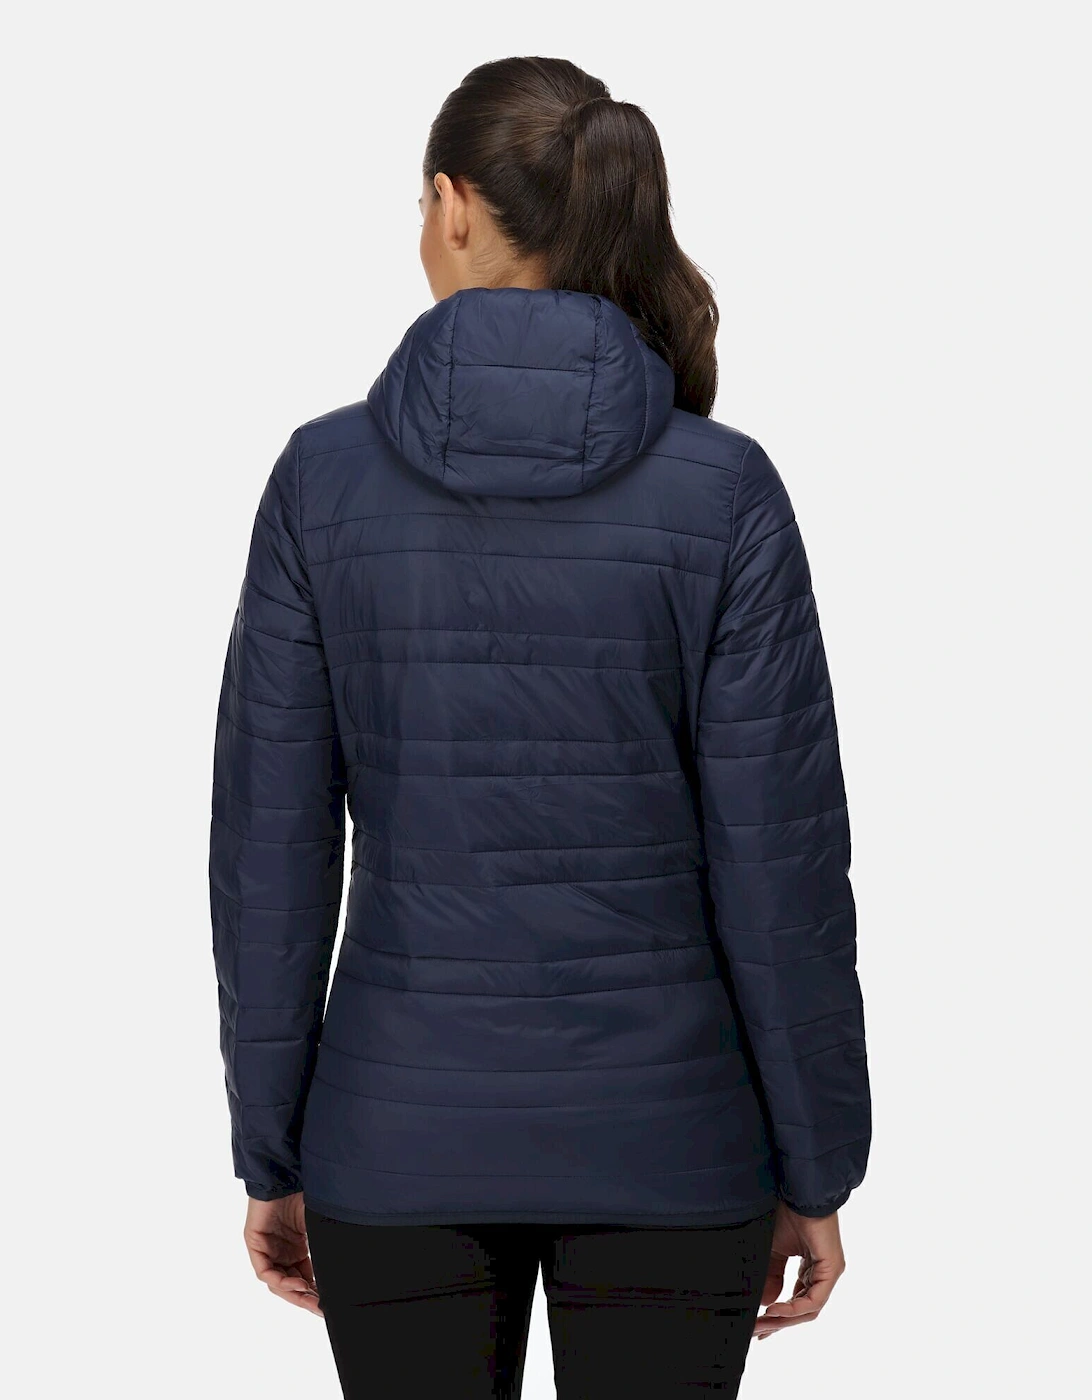 Womens/Ladies Firedown Packaway Insulated Jacket